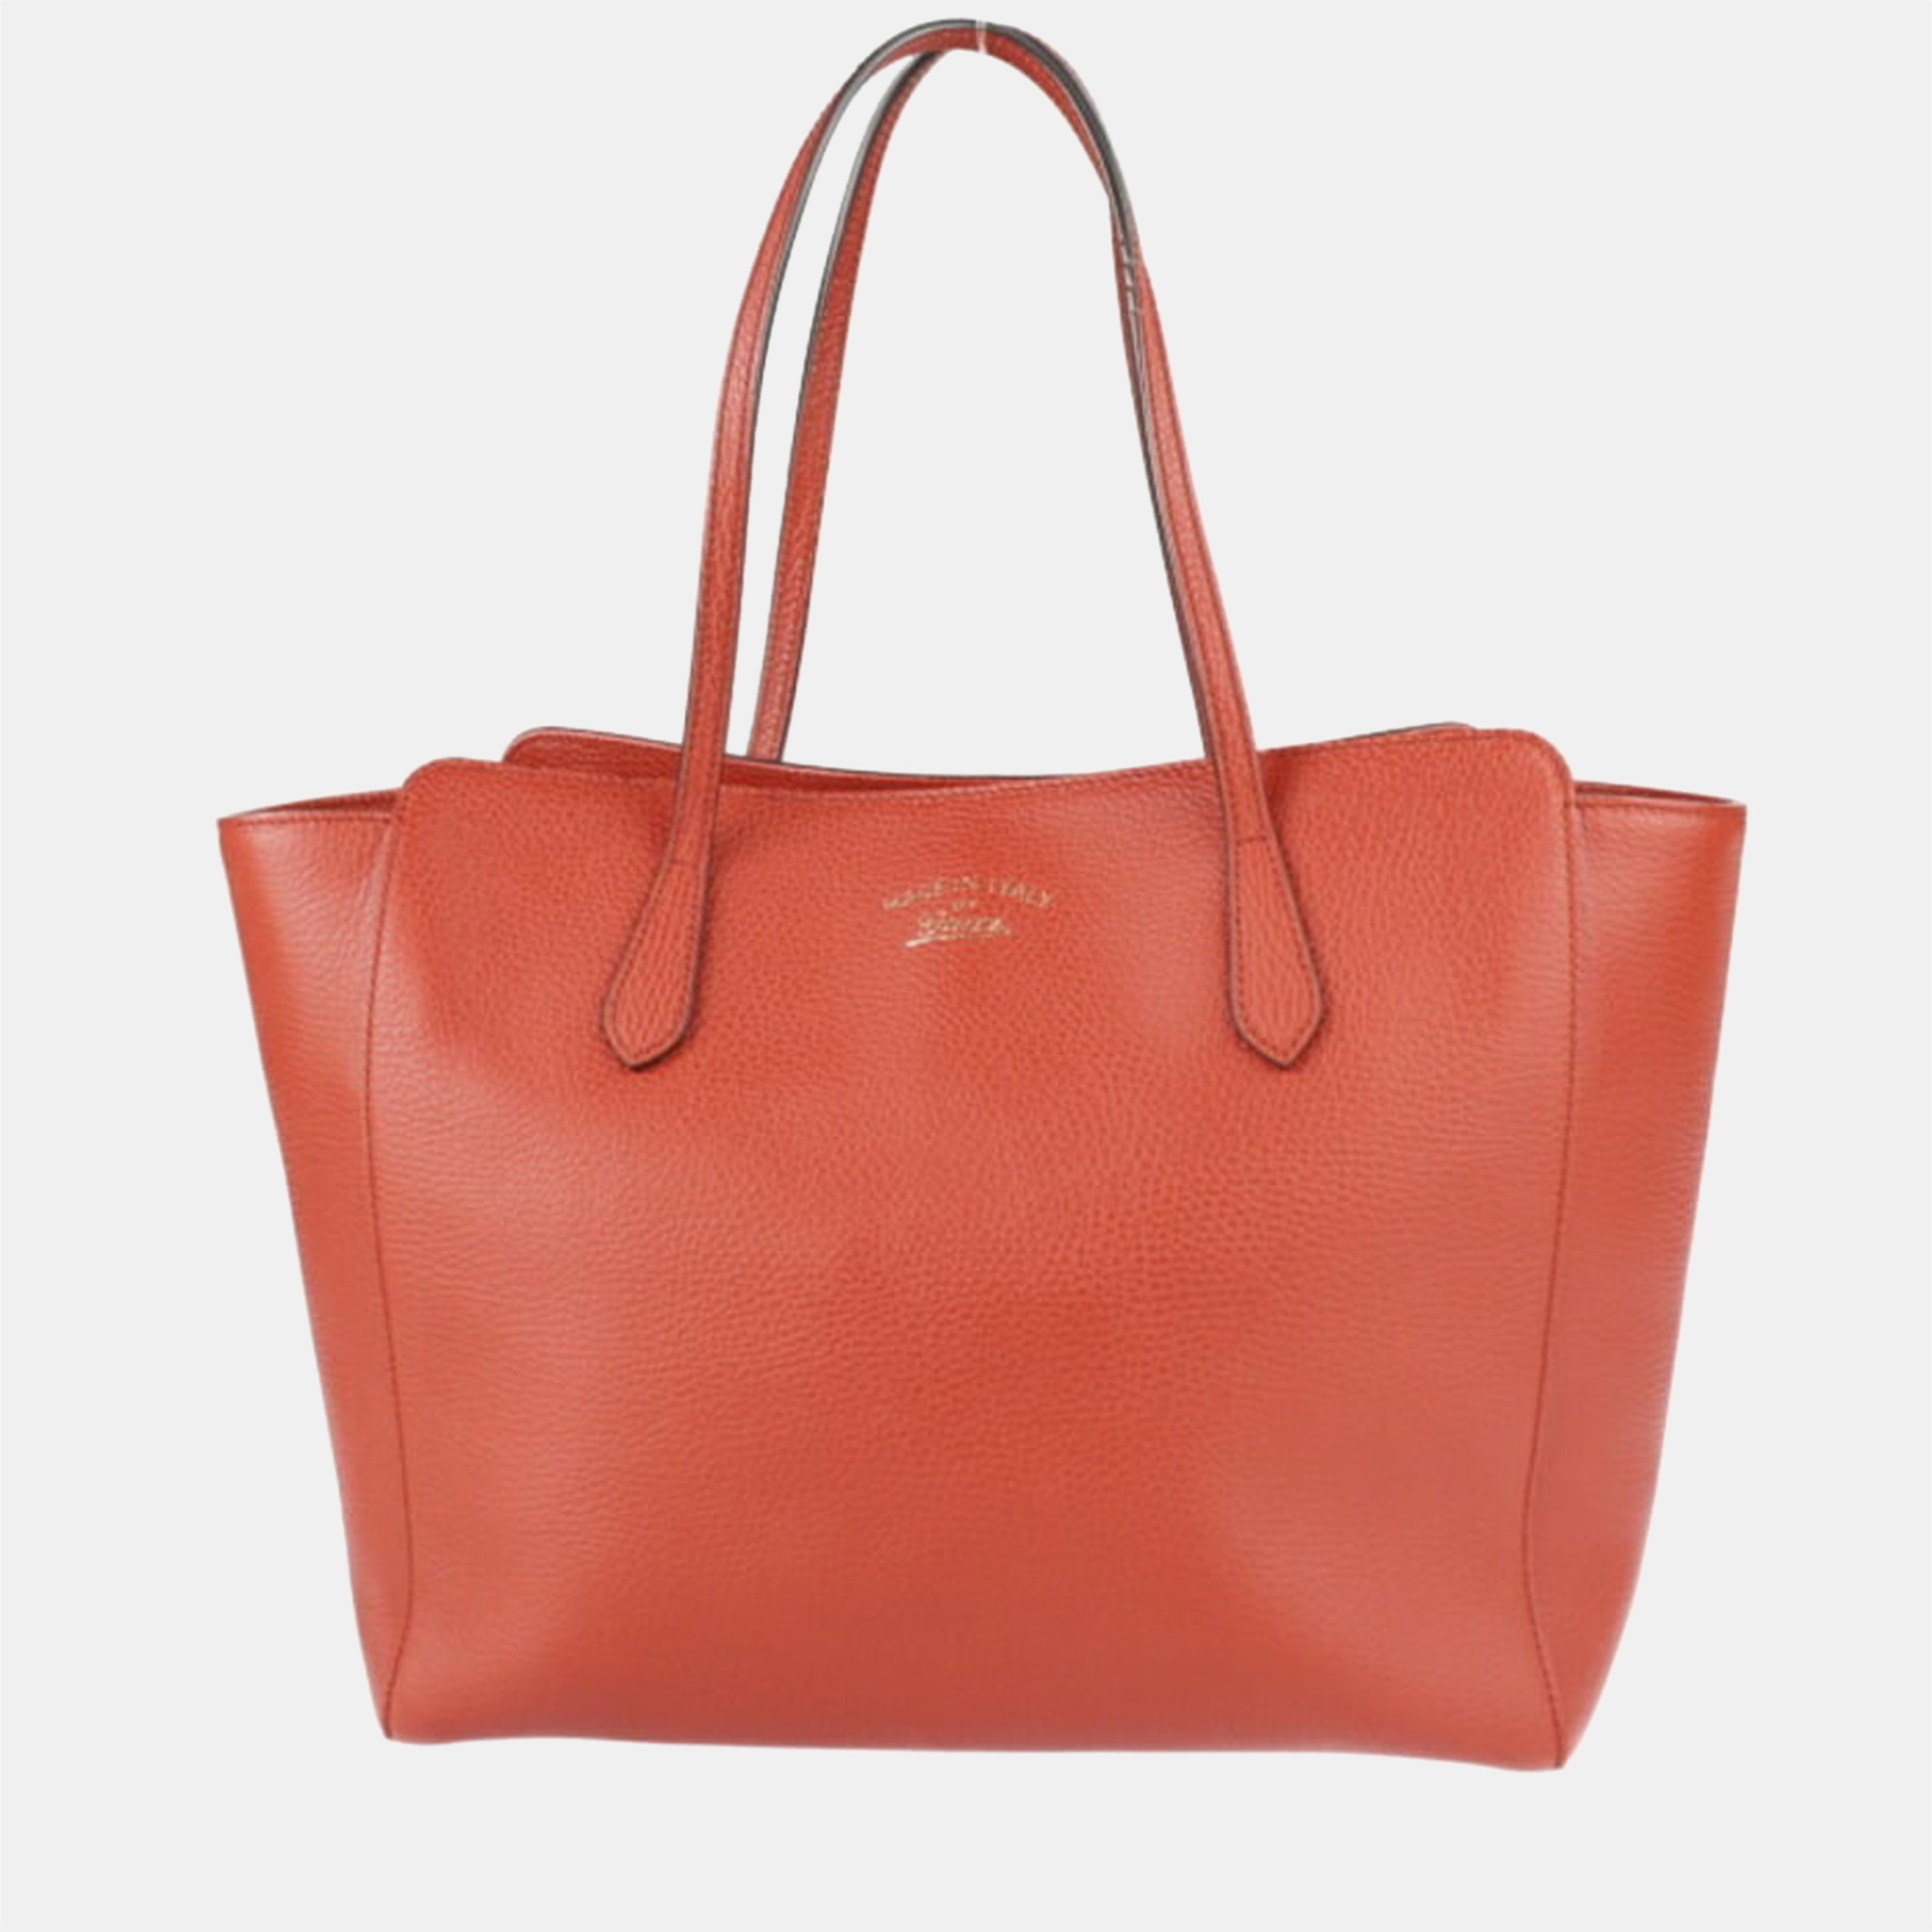 Gucci orange leather medium swing tote bag